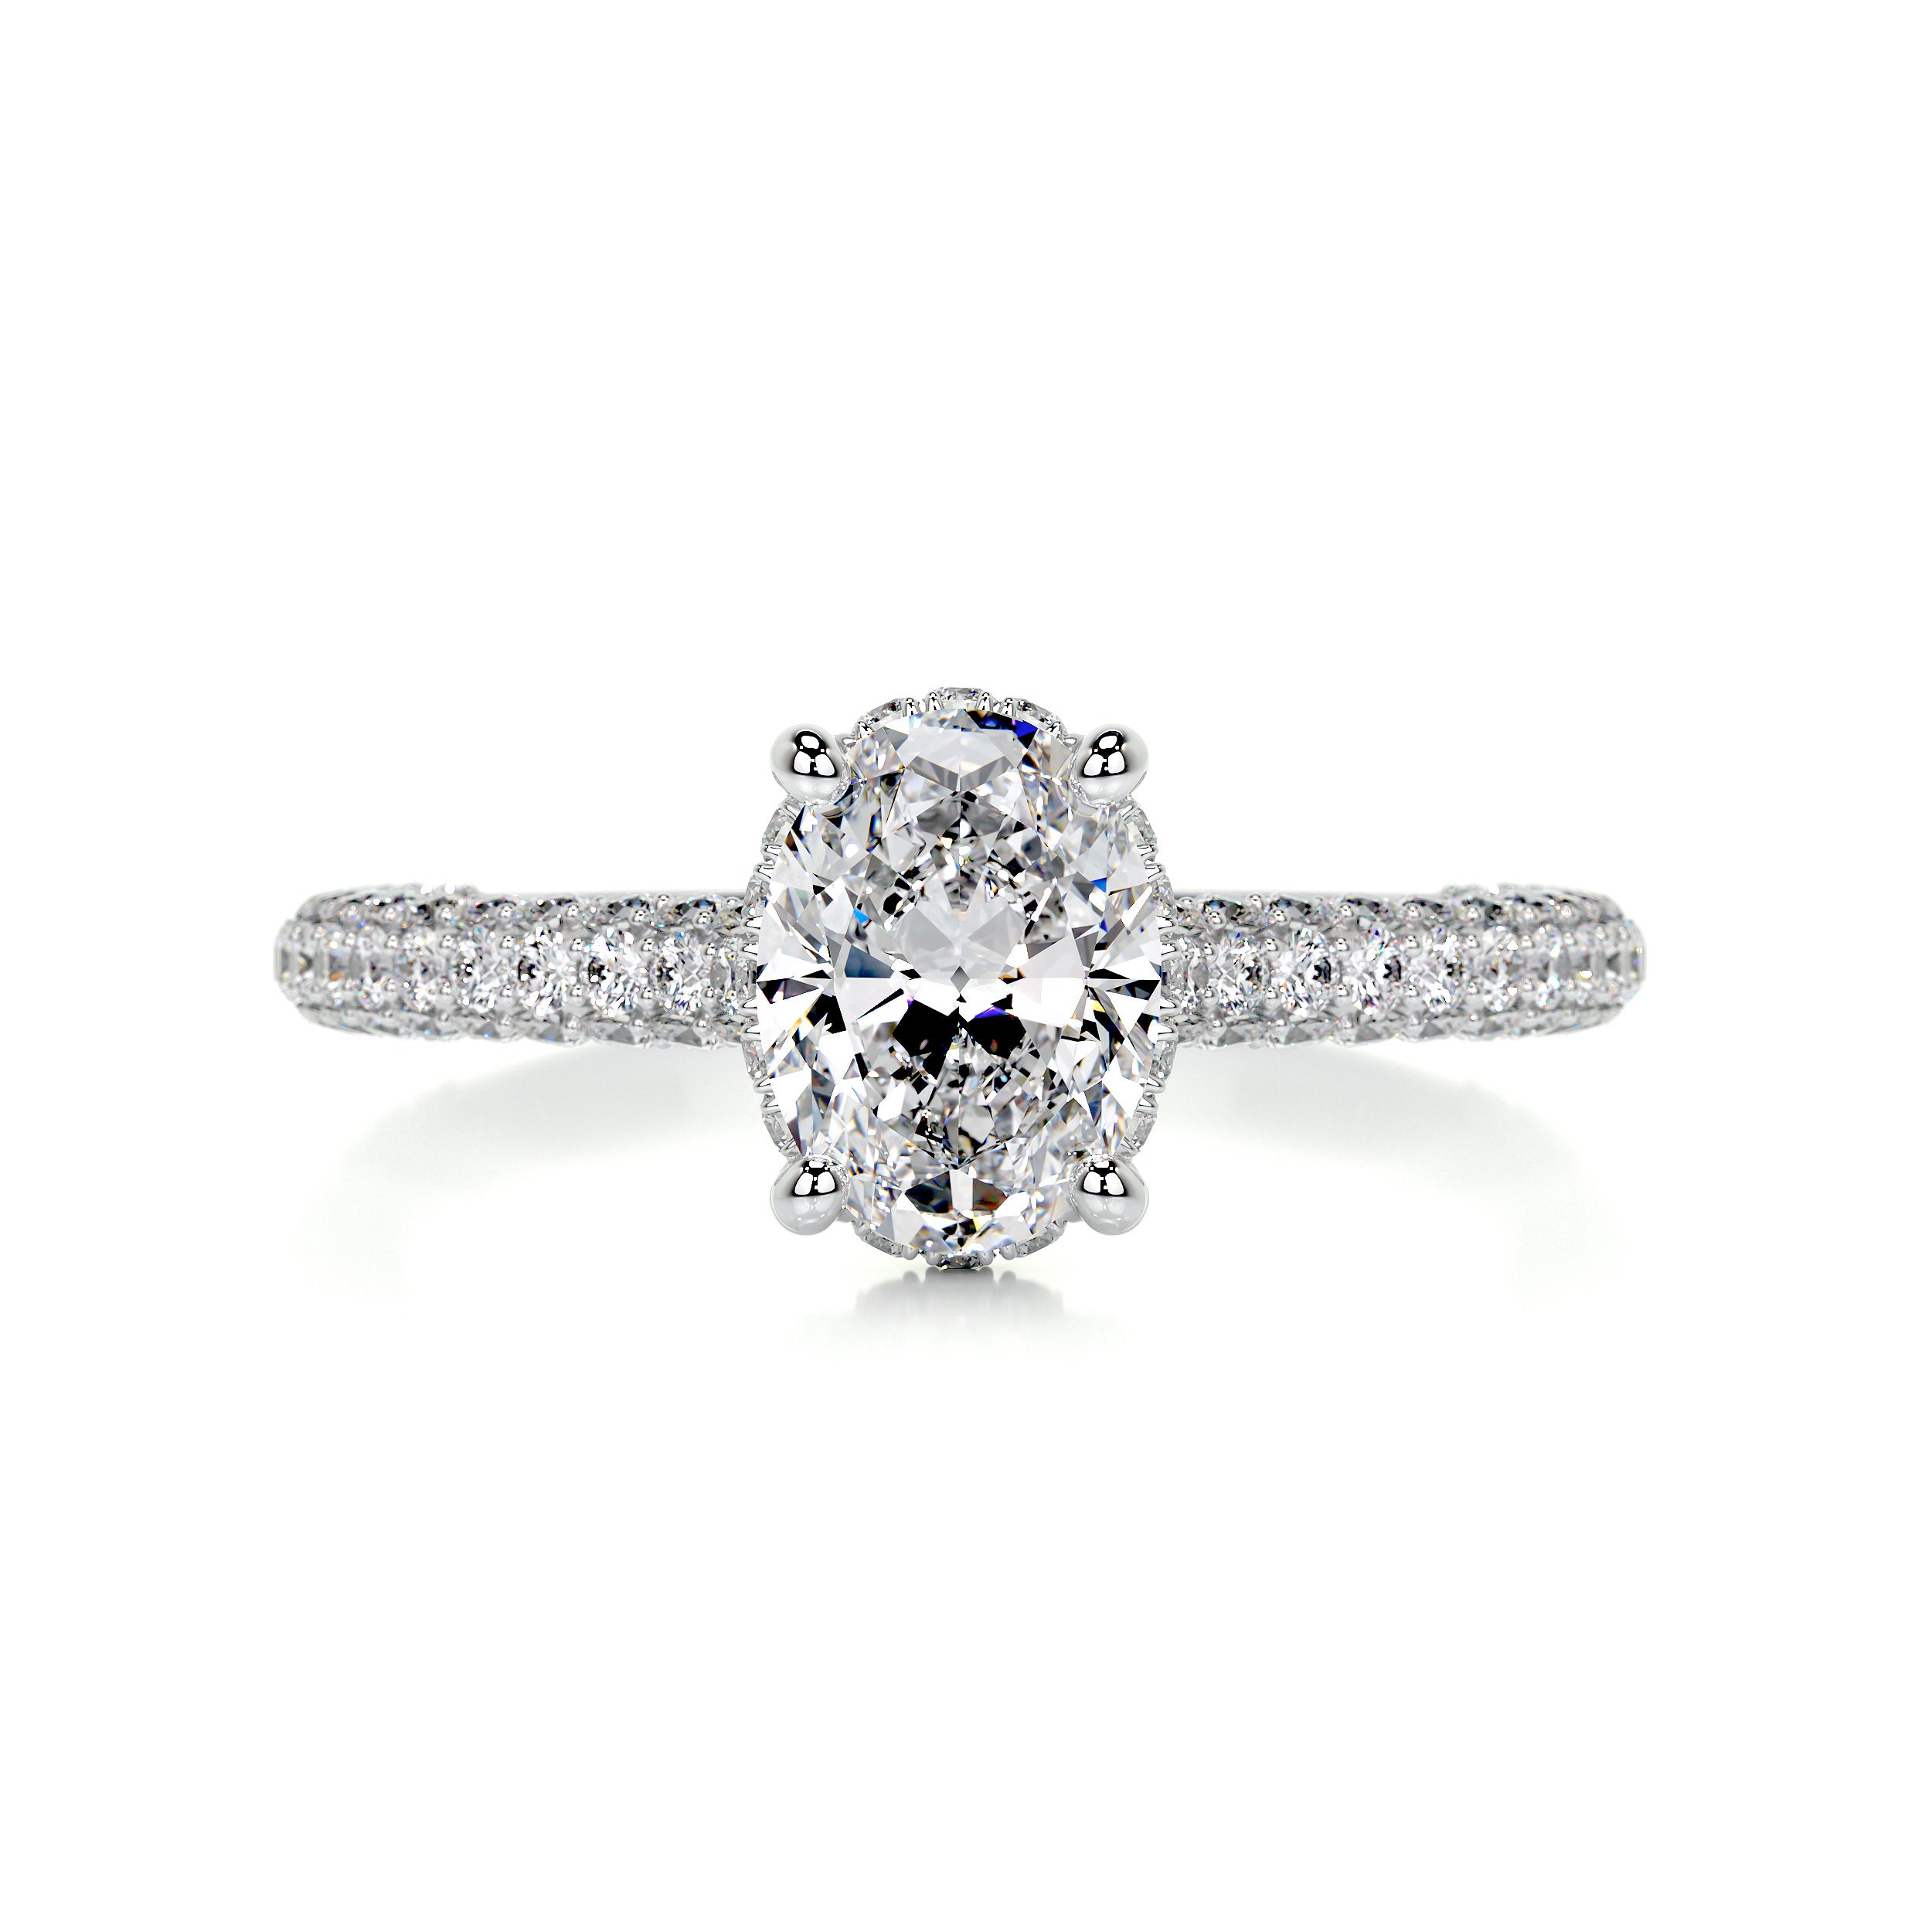 Rebecca Diamond Engagement Ring   (1.8 Carat) -14K White Gold